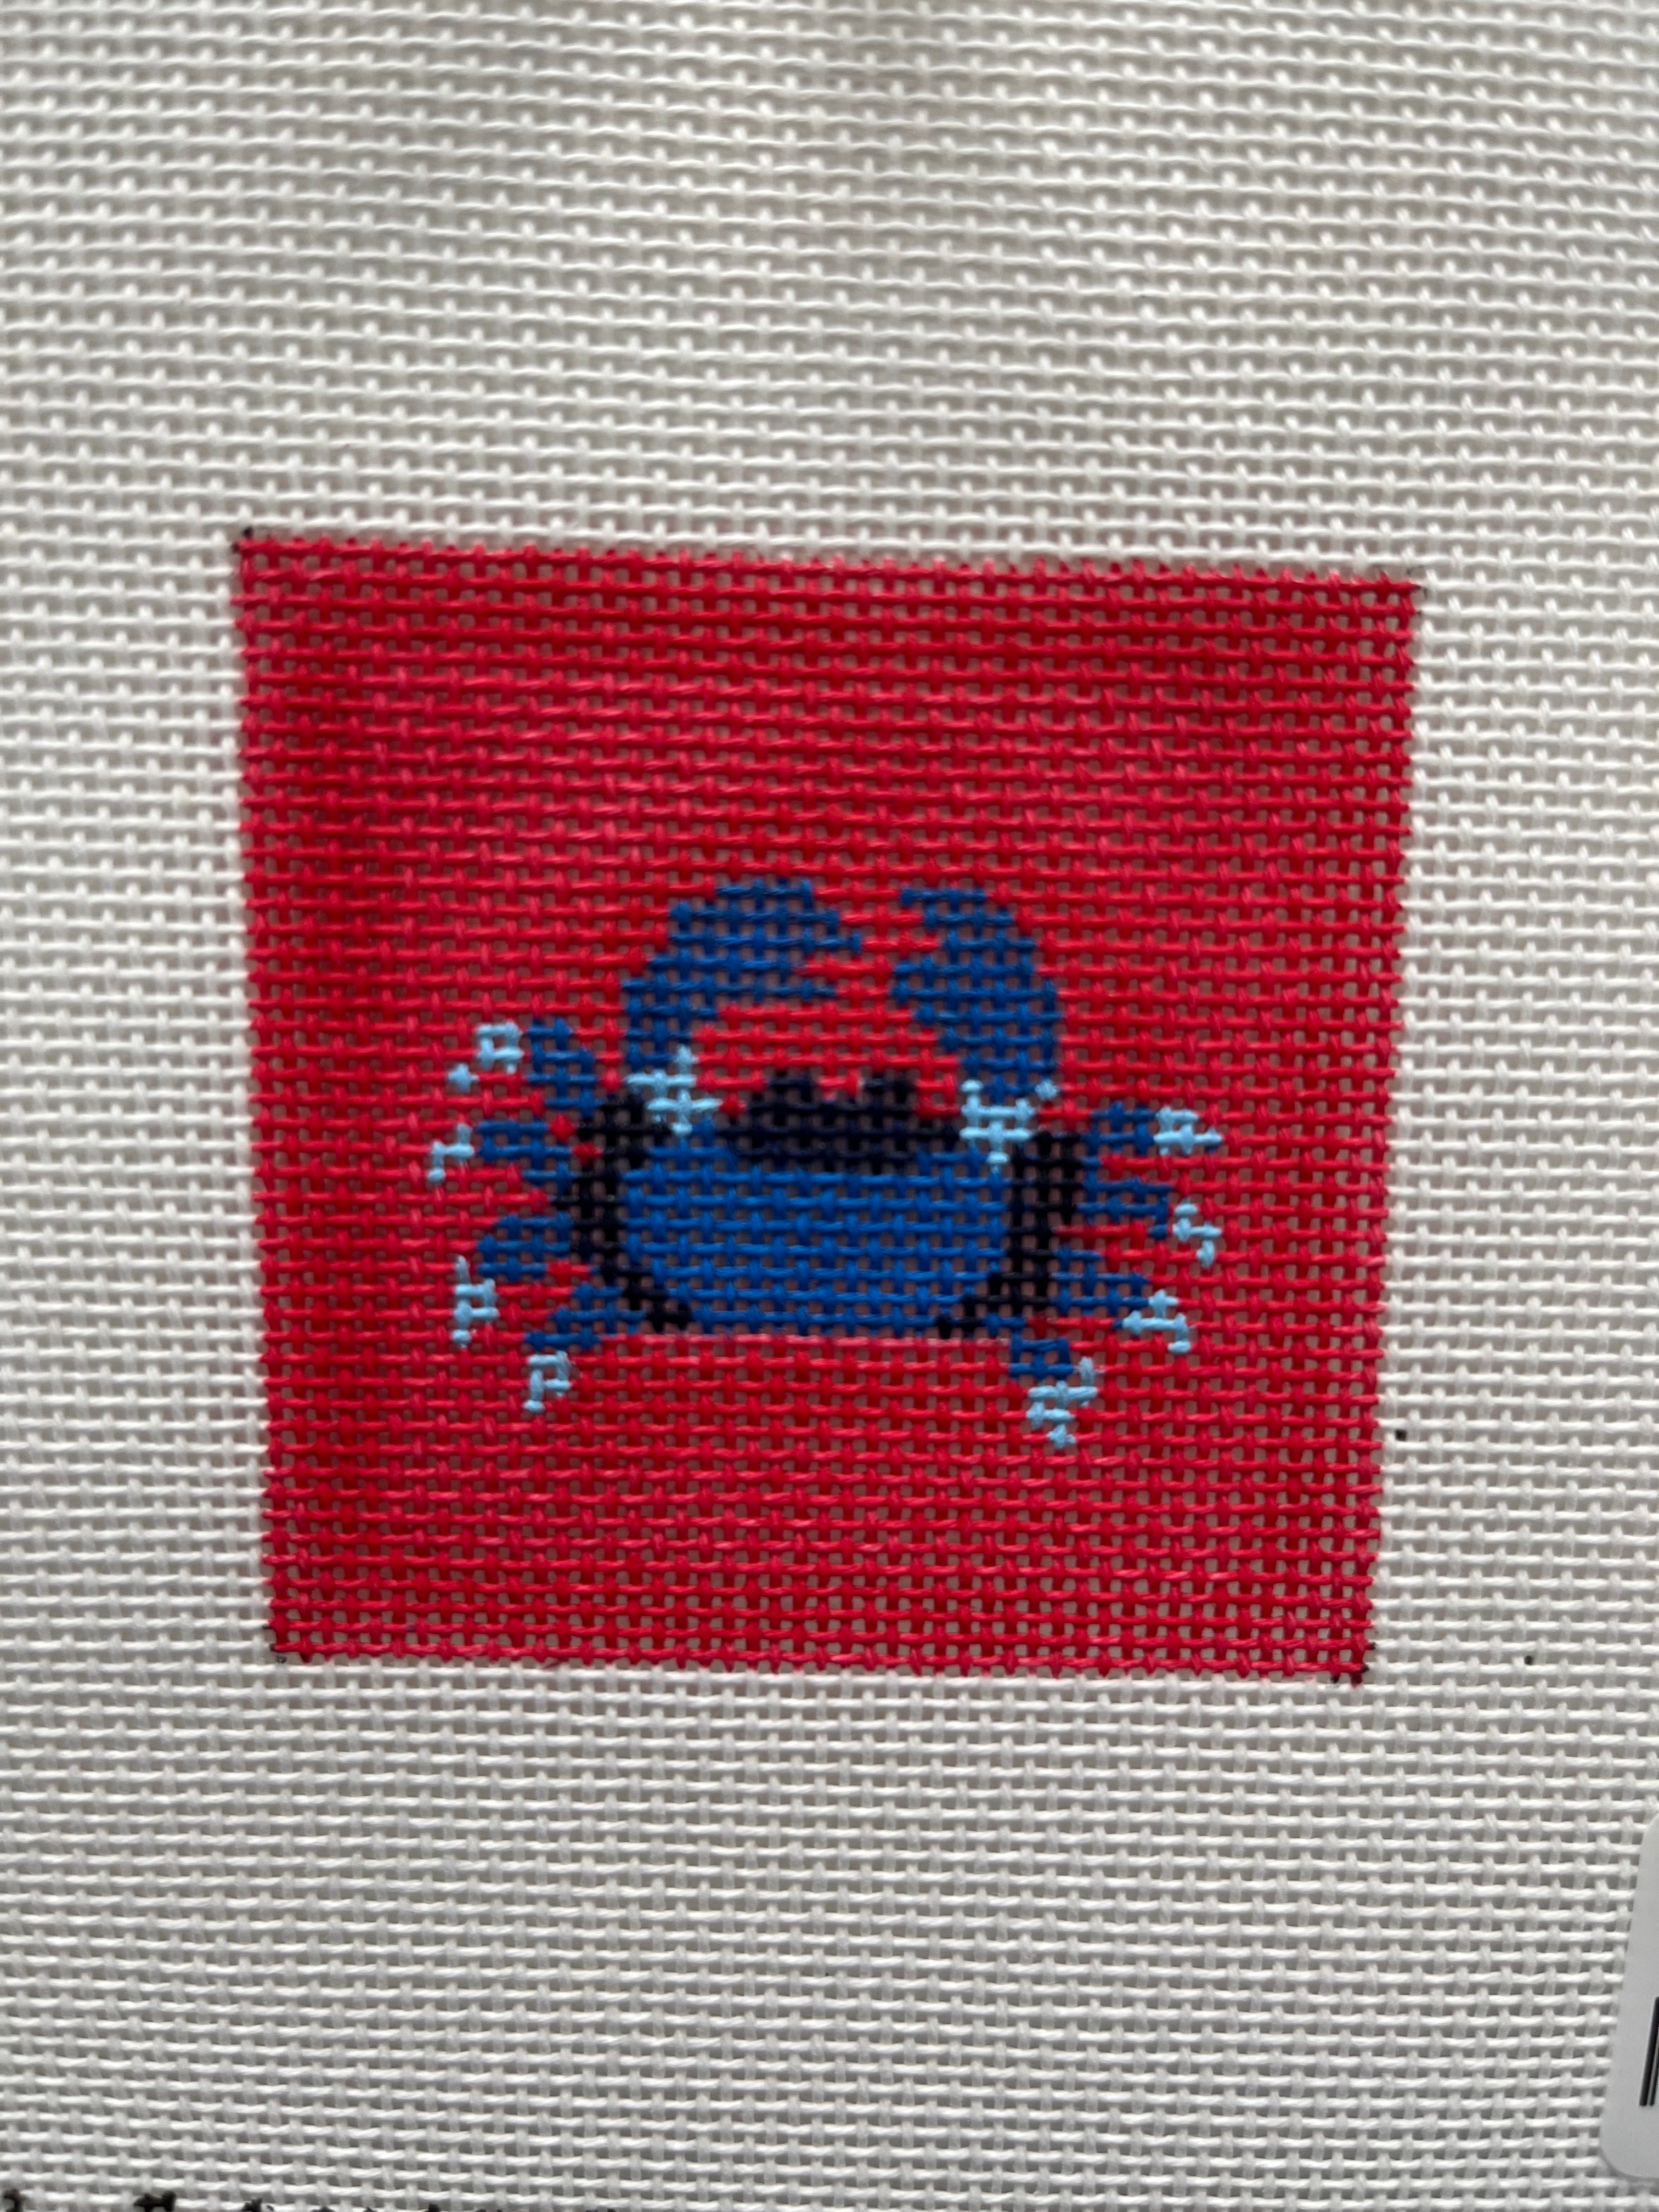 I004 - Blue Crab, Red Square